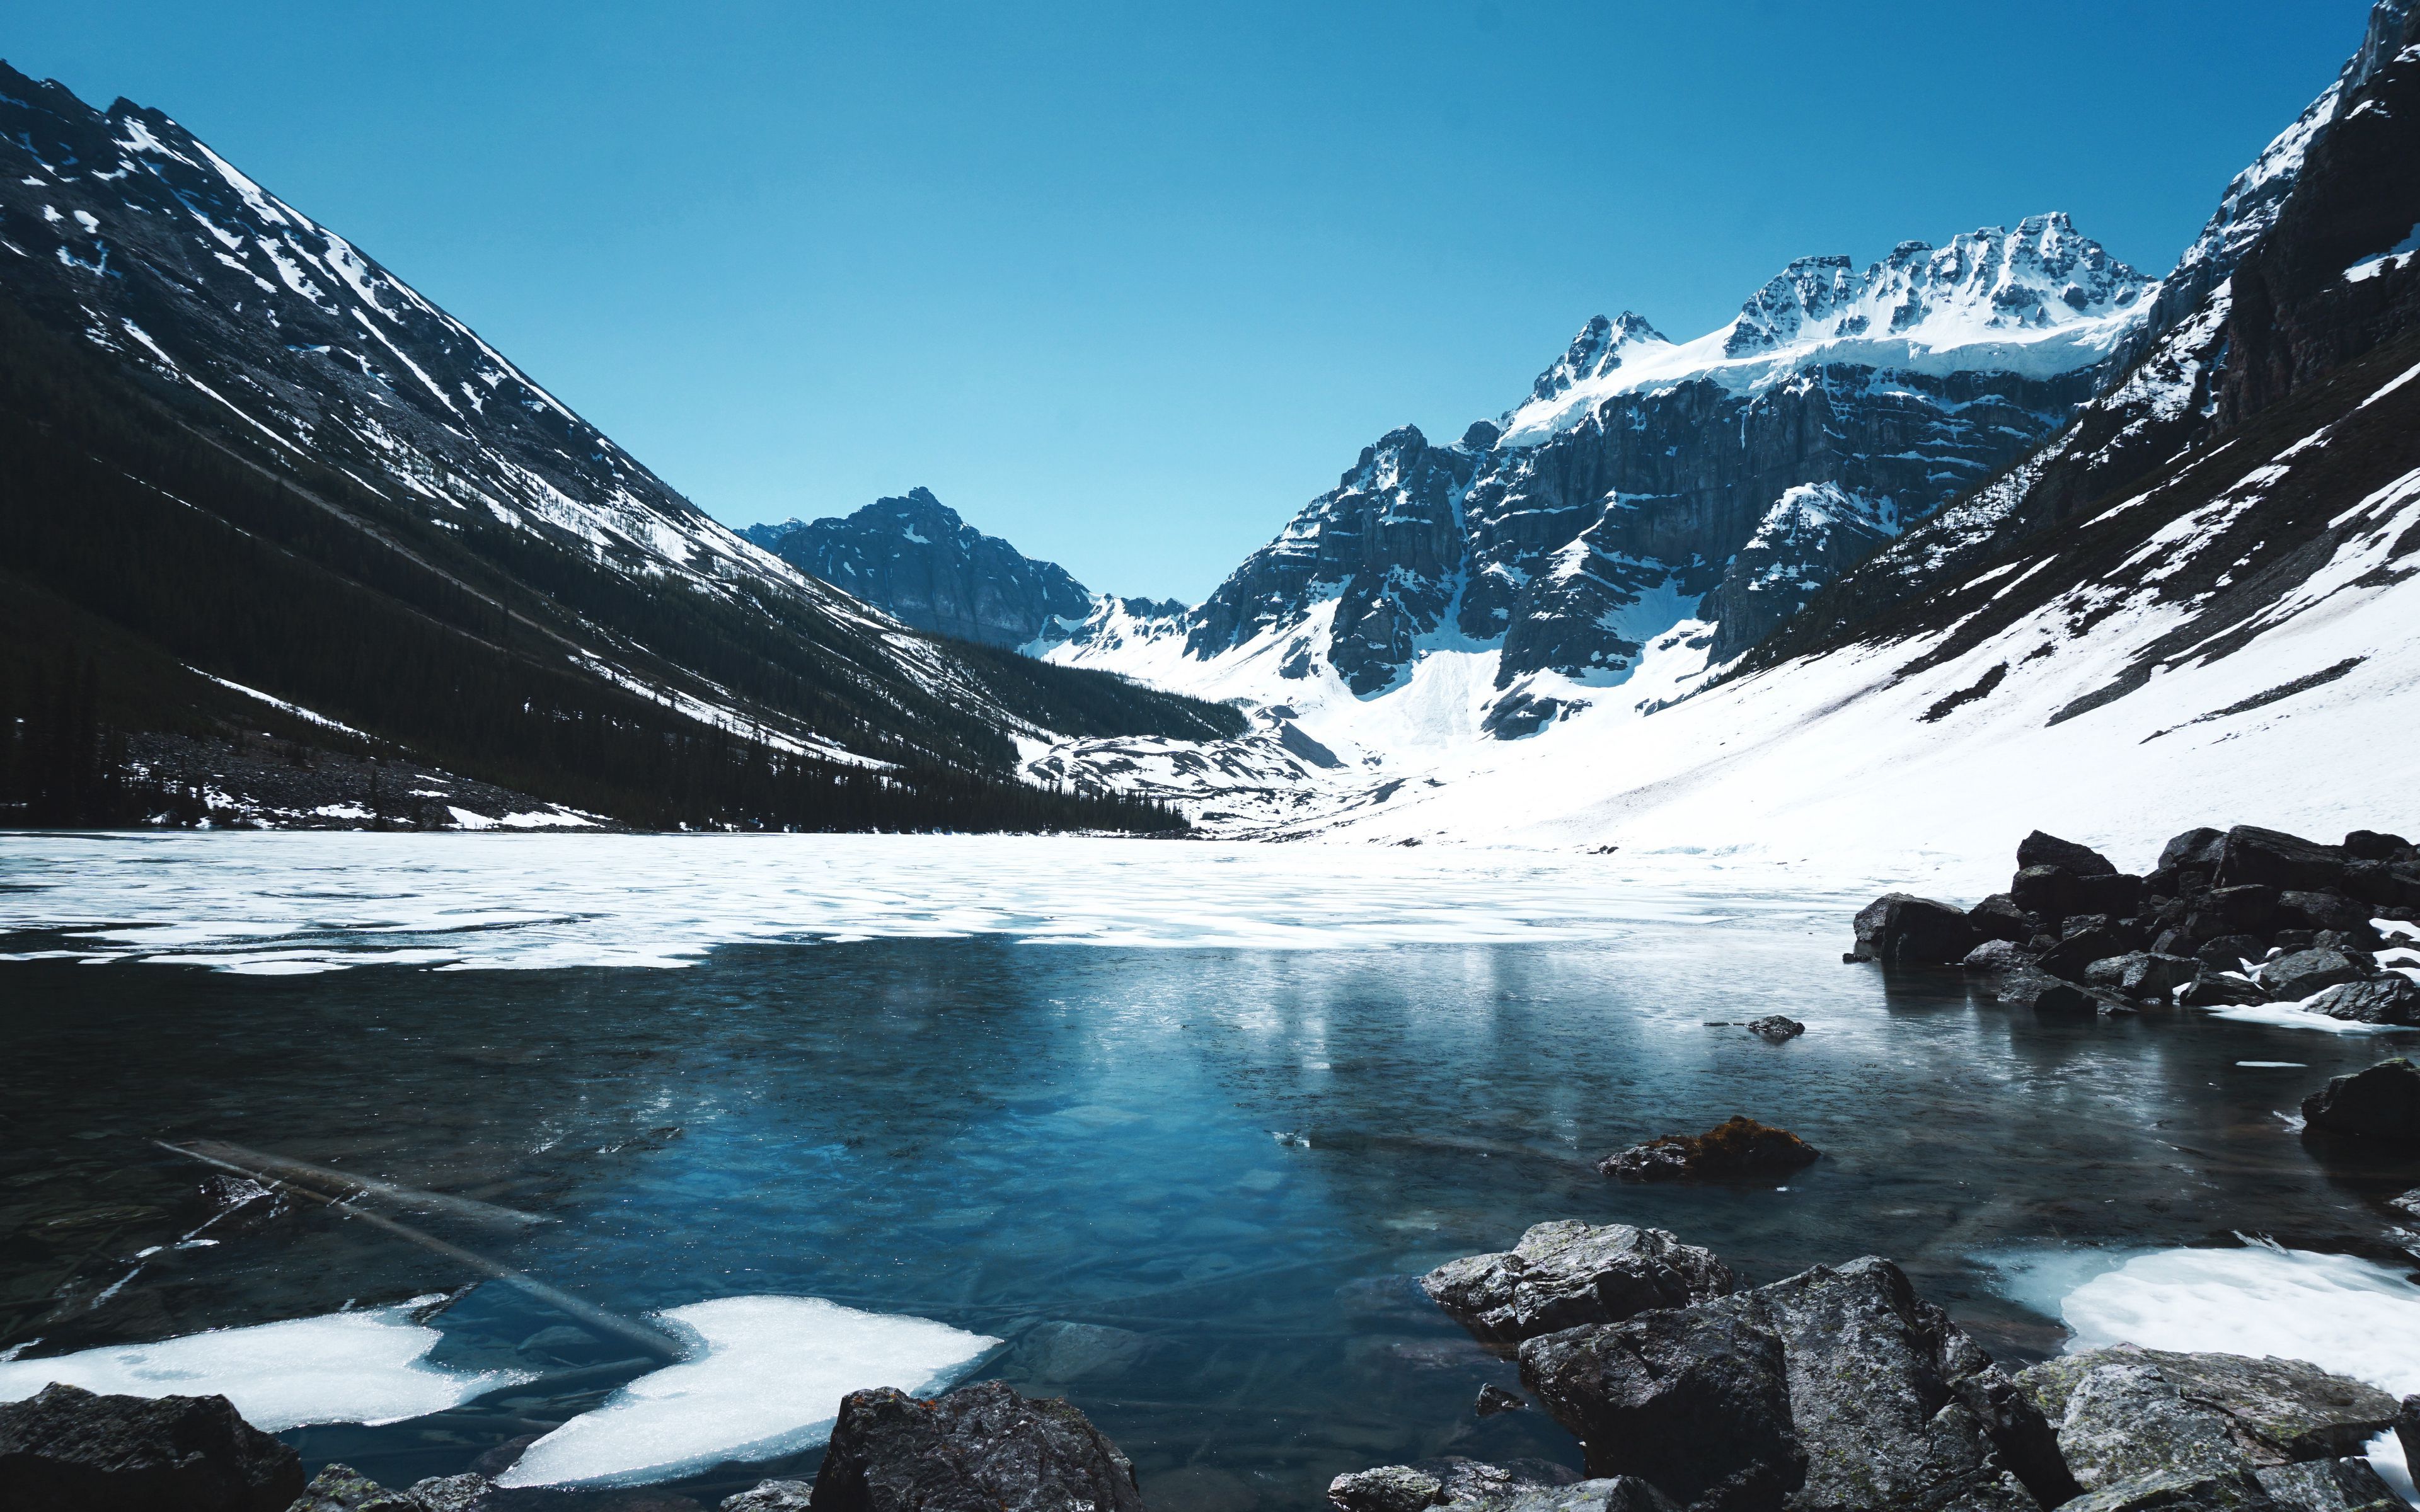 Download wallpaper 3840x2400 mountains, lake, ice, snow 4k ultra